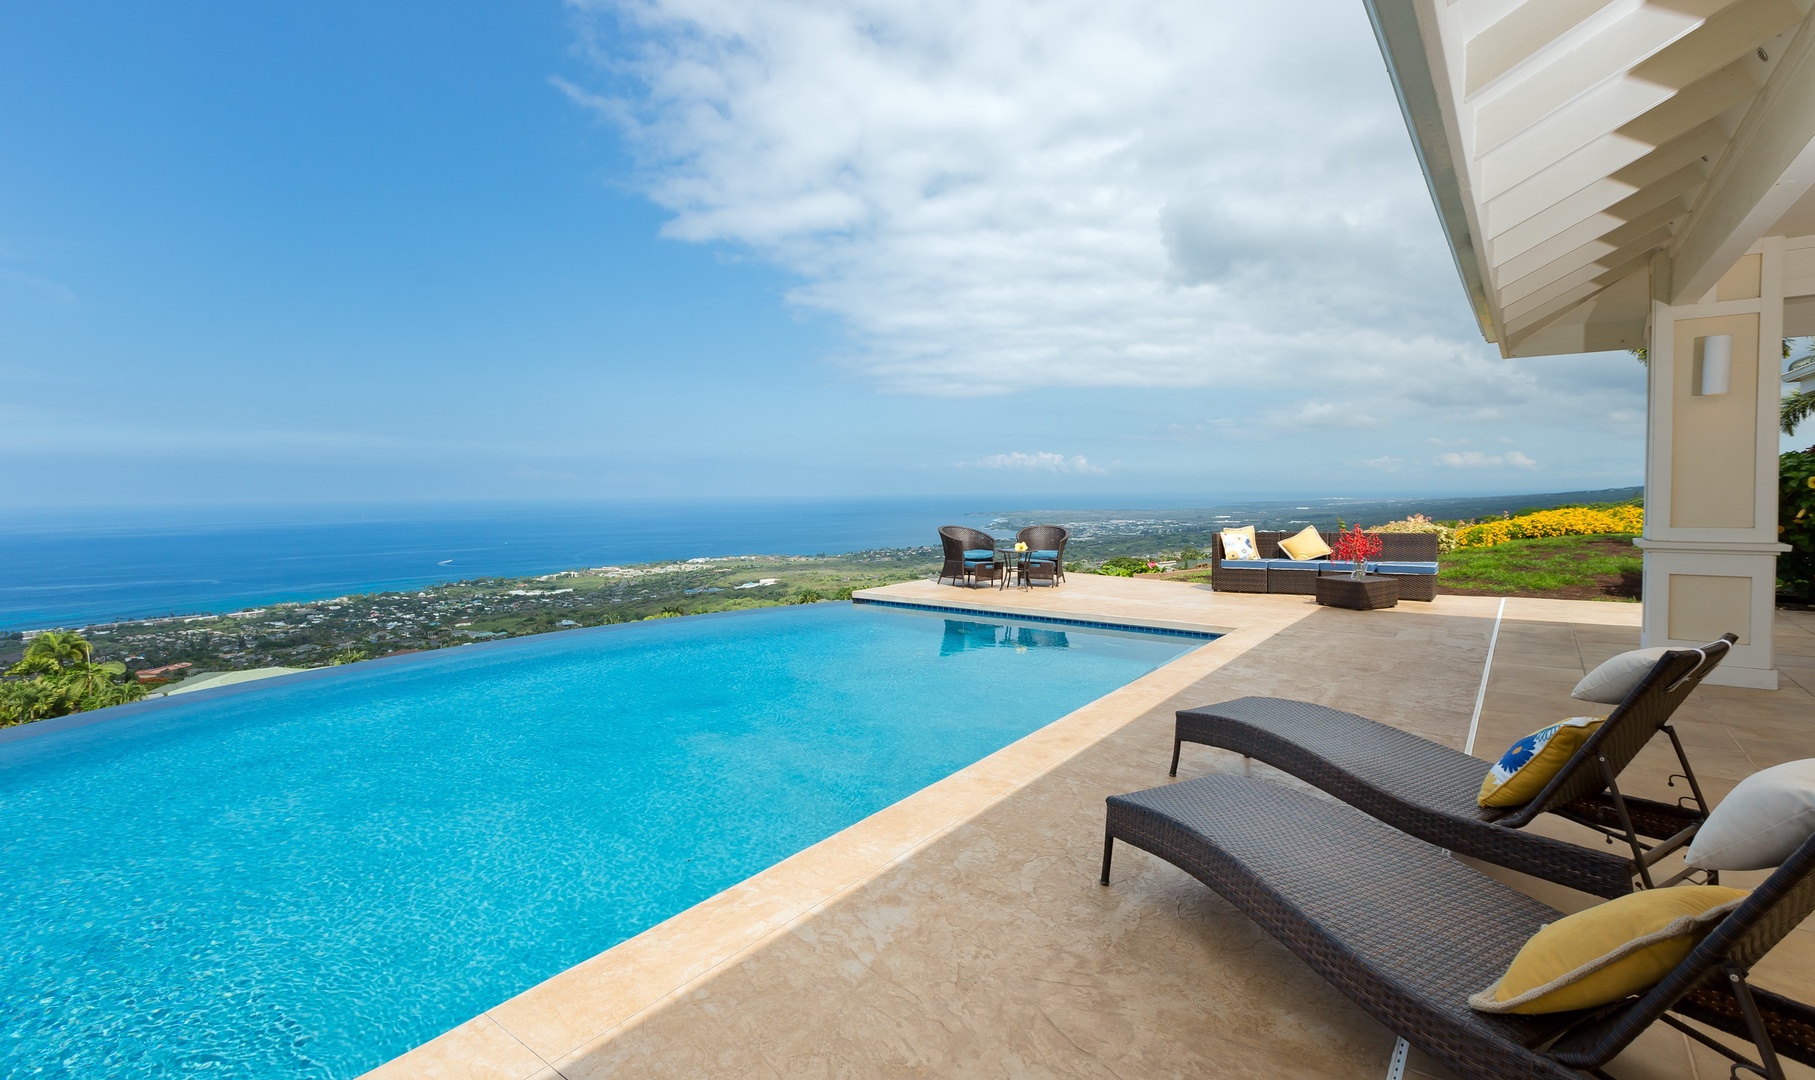 Kailua Kona Vacation Rentals, Hale Maluhia (Big Island) - The infinity pool overlooking the ocean can't be beat!